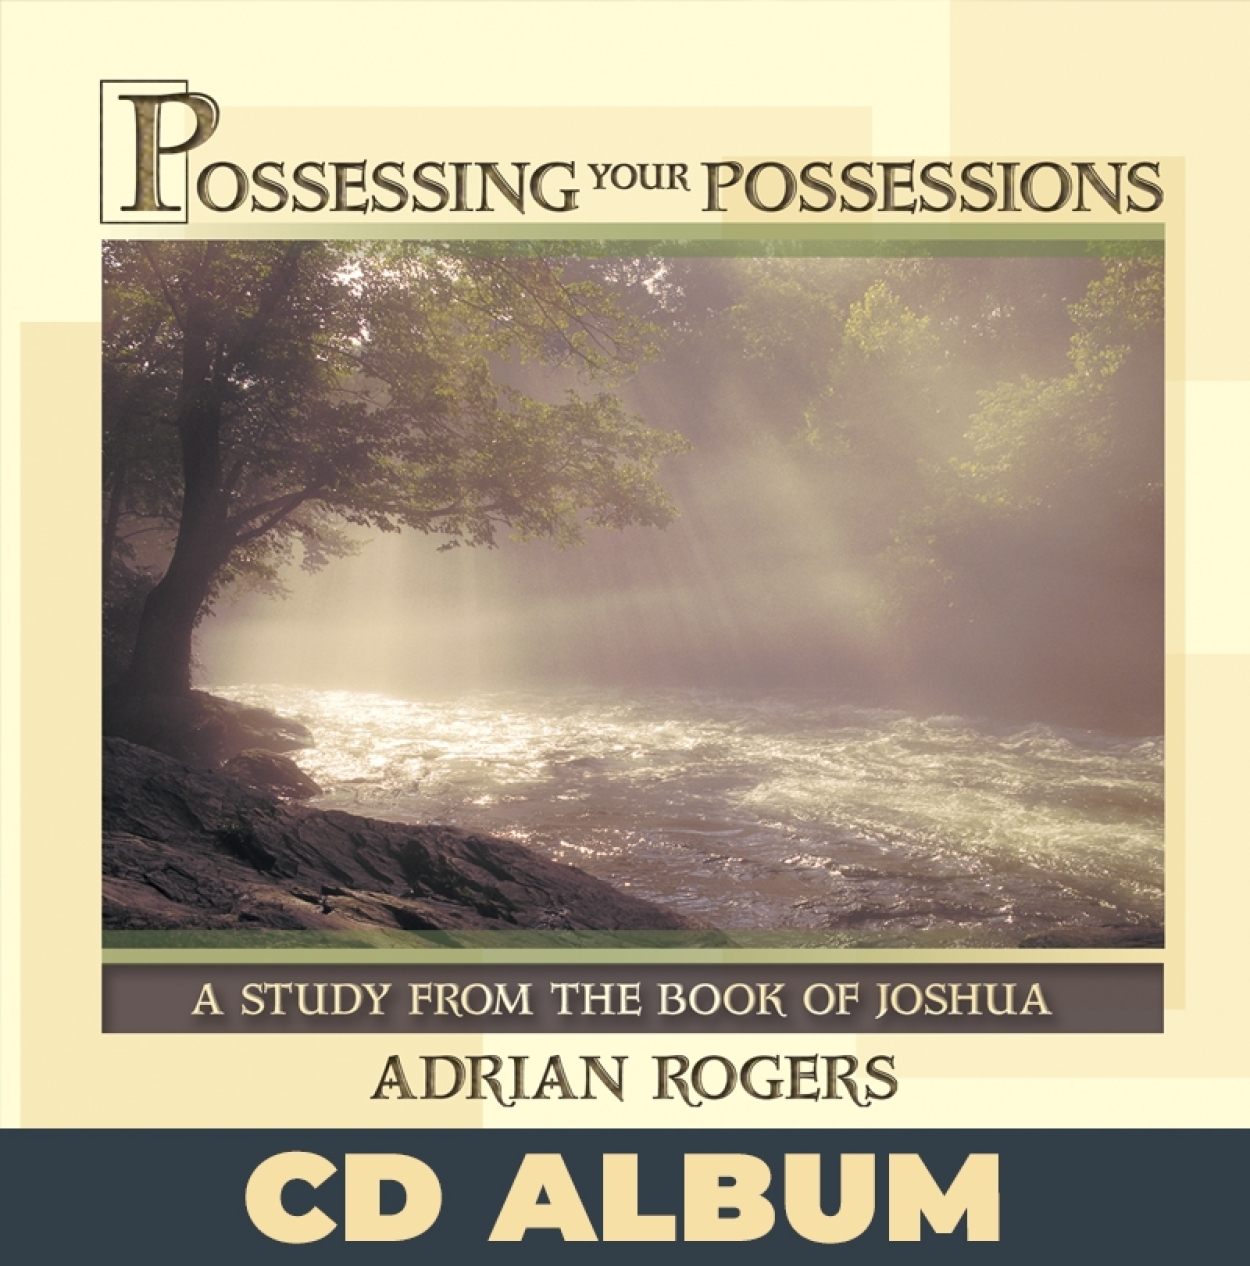 Possessing your possessions cd album cda114